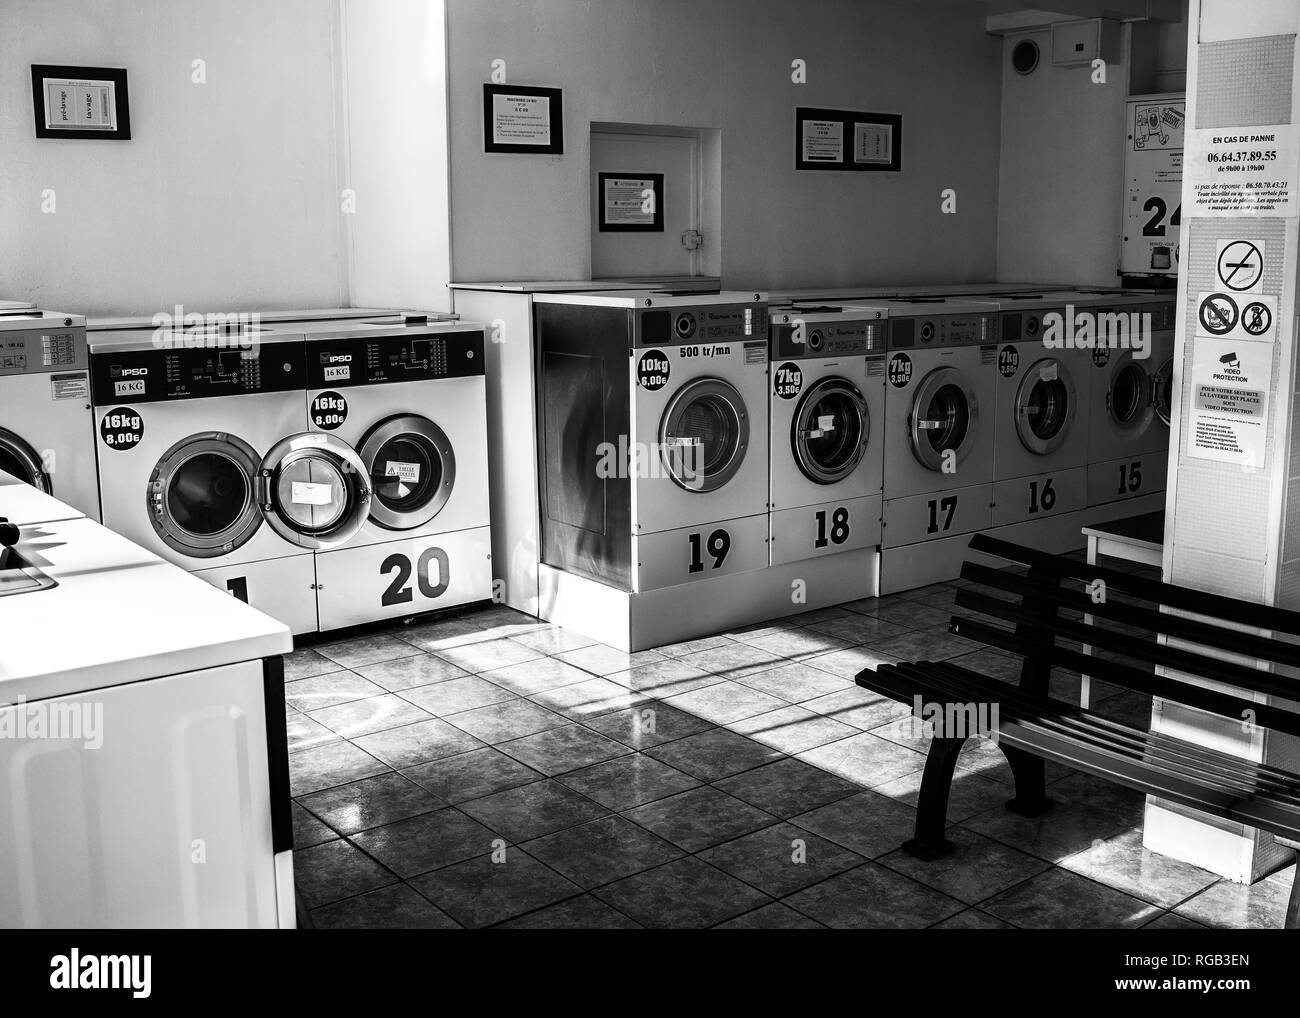 public laundromat empty interior Stock Photo